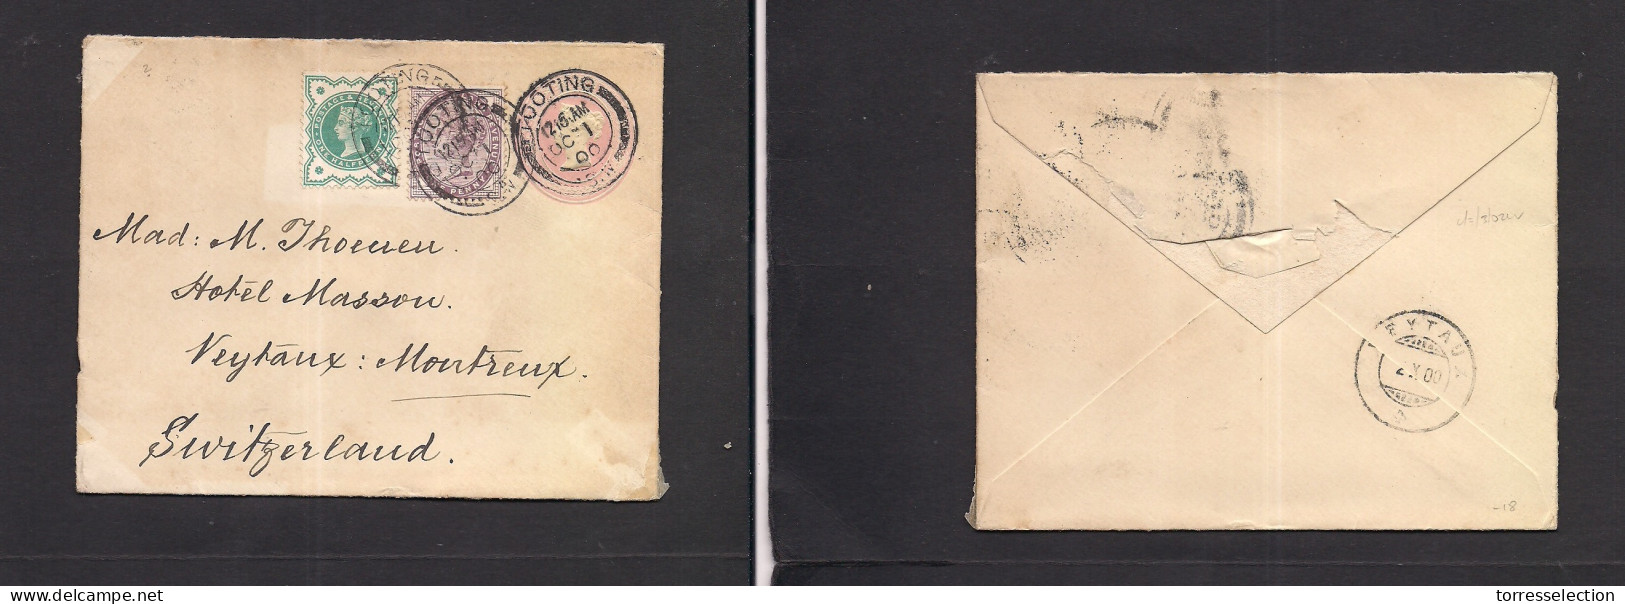 Great Britain - Stationery. 1900 (Oct 1) Tooting - Switzerland, Montreux (2 Oct) 1d Rose Stat Envelope + 2 Adtls At  2 1 - ...-1840 Voorlopers